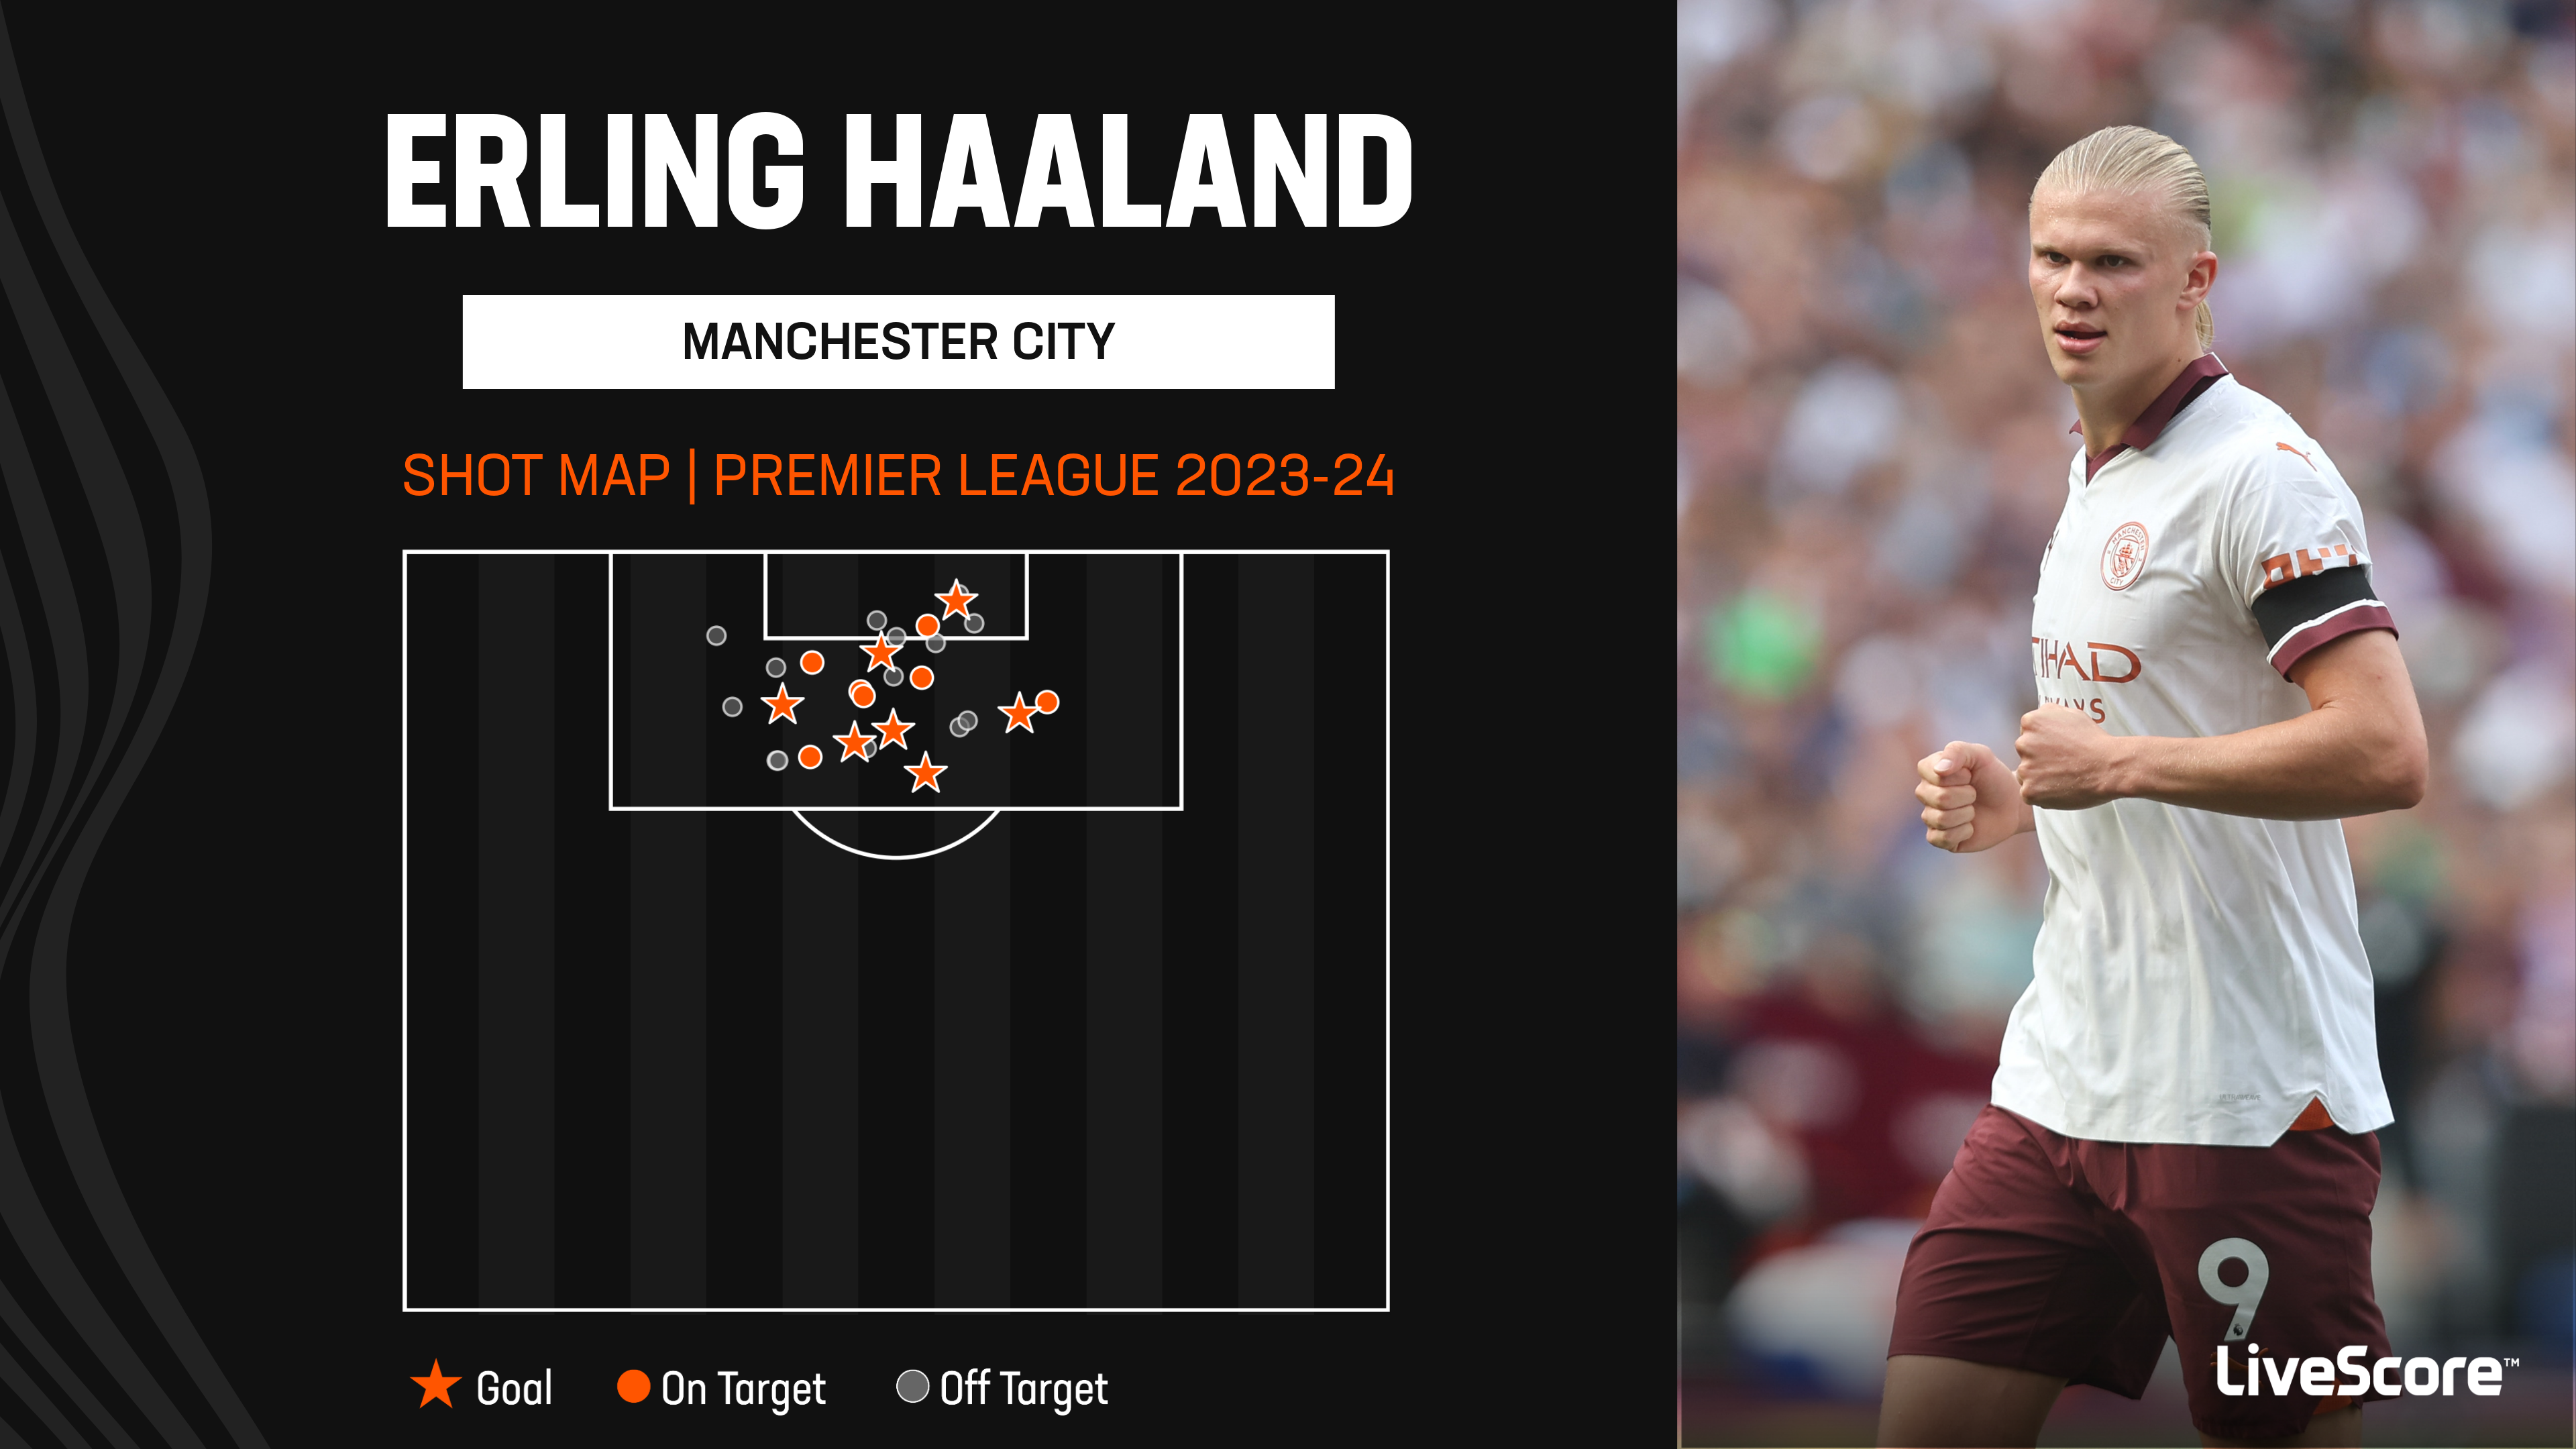 Premier League top scorers 2022/23: Is Erling Haaland set to beat